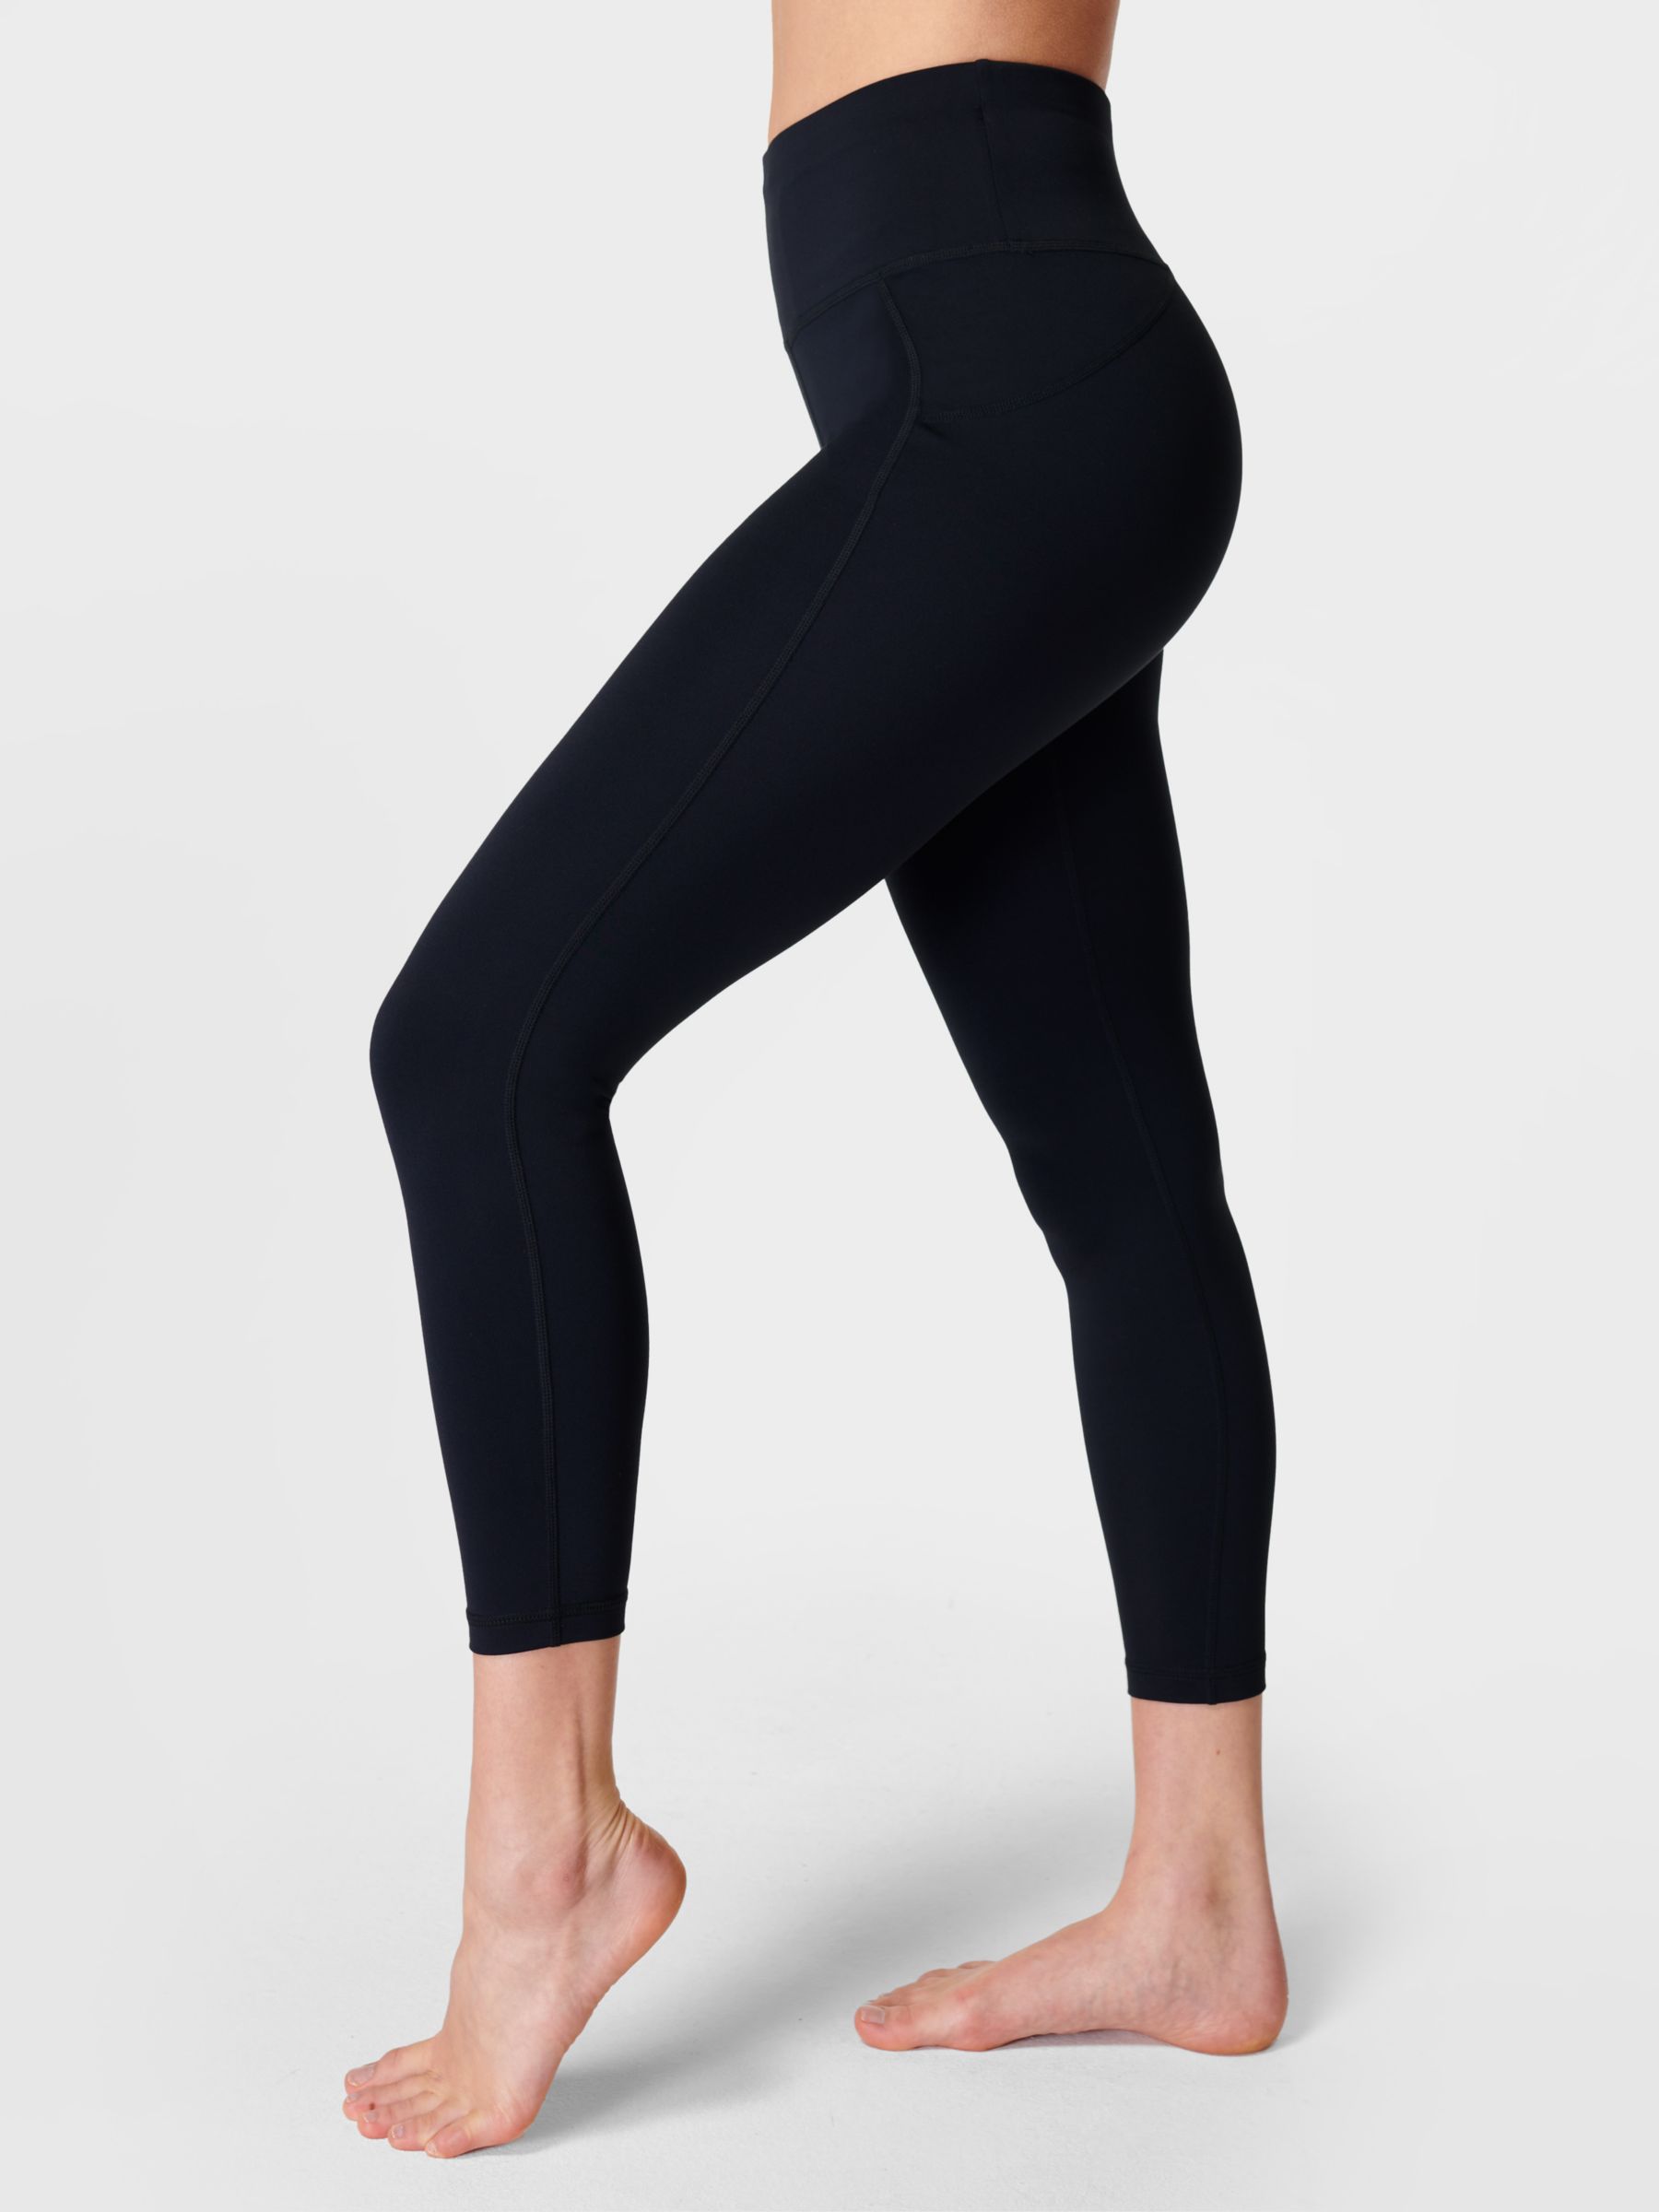 JOYSPELS Women's High Waisted Gym Leggings - Yoga Pants Womens Workout  Running Sports Black Leggings with Pockets-Black-S : : Fashion